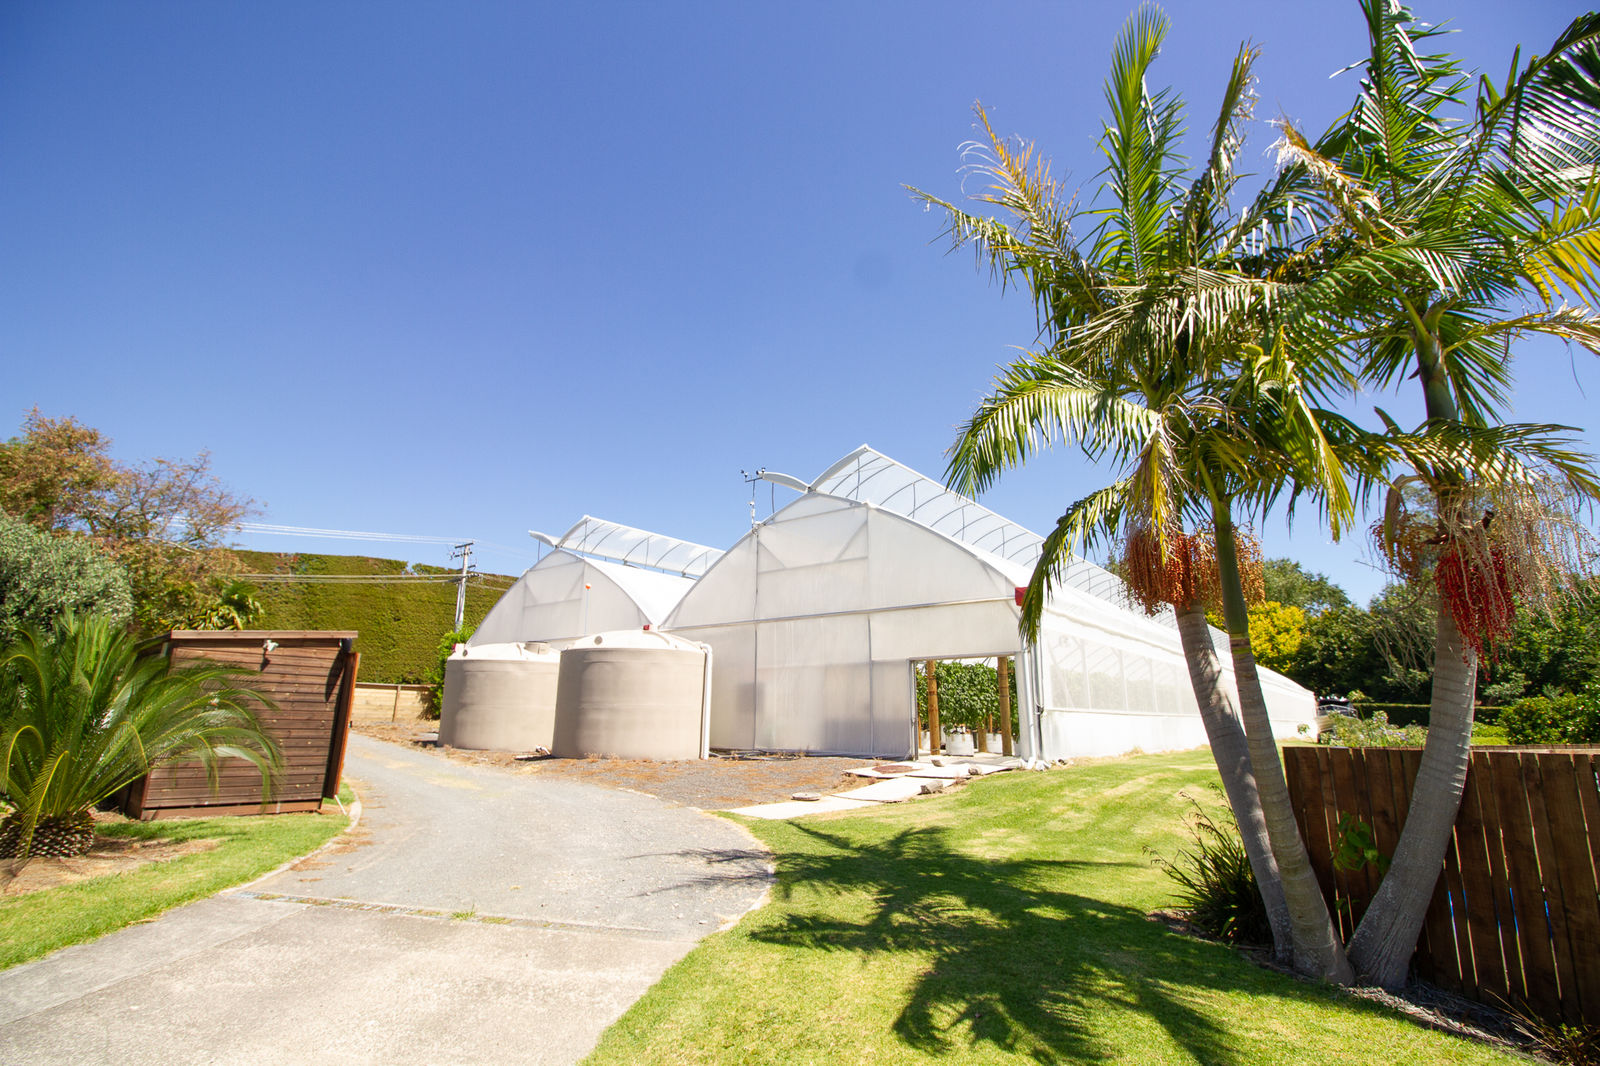 The CEA greenhouse at Scott Pilcher's farm